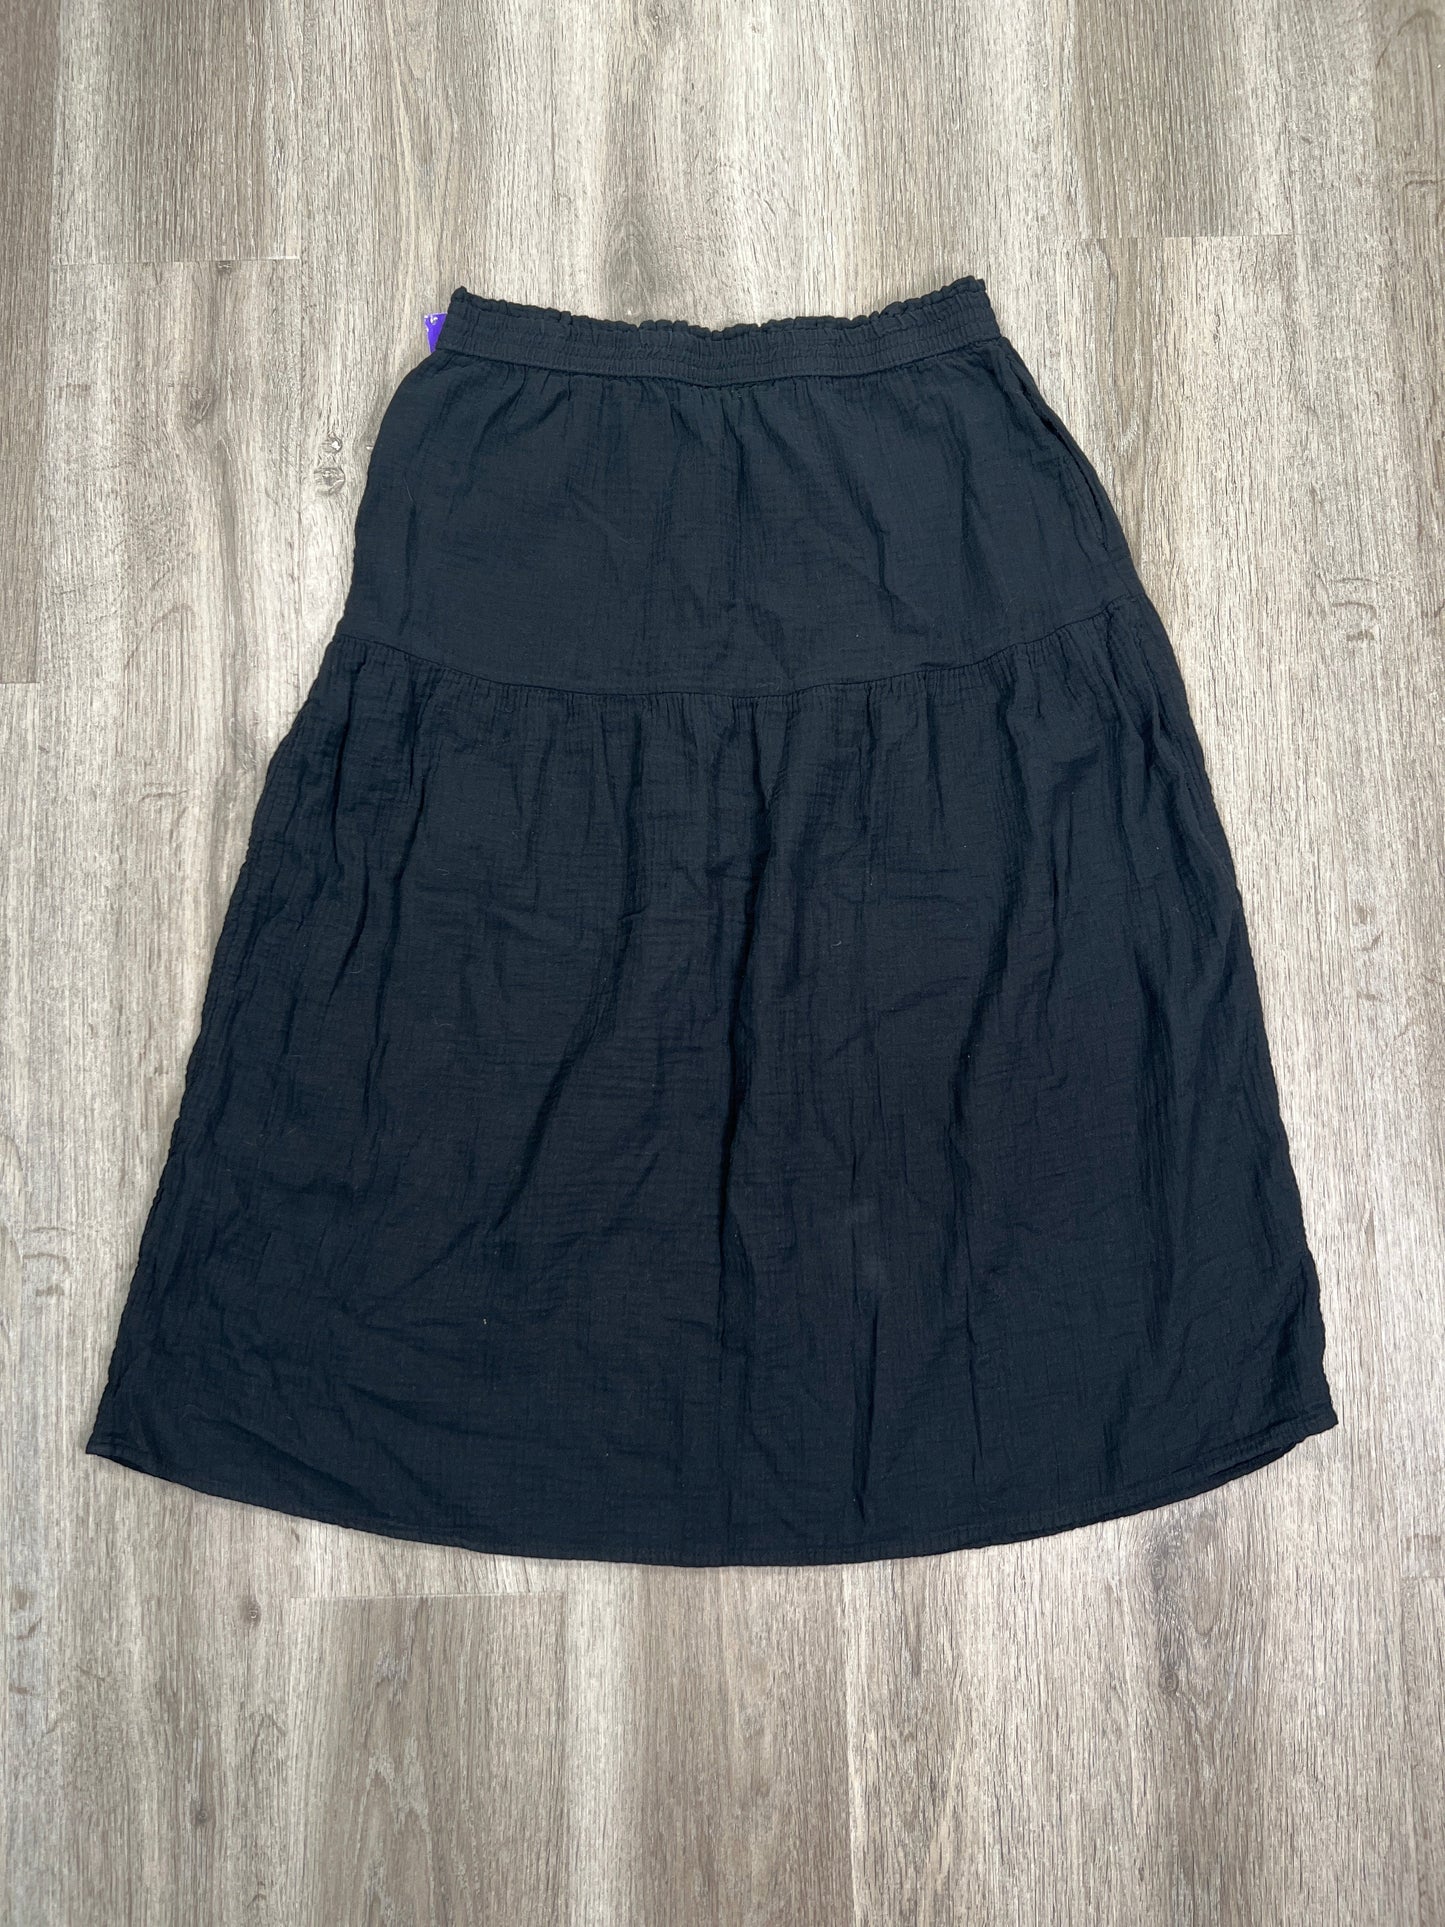 Skirt Midi By Universal Thread  Size: L